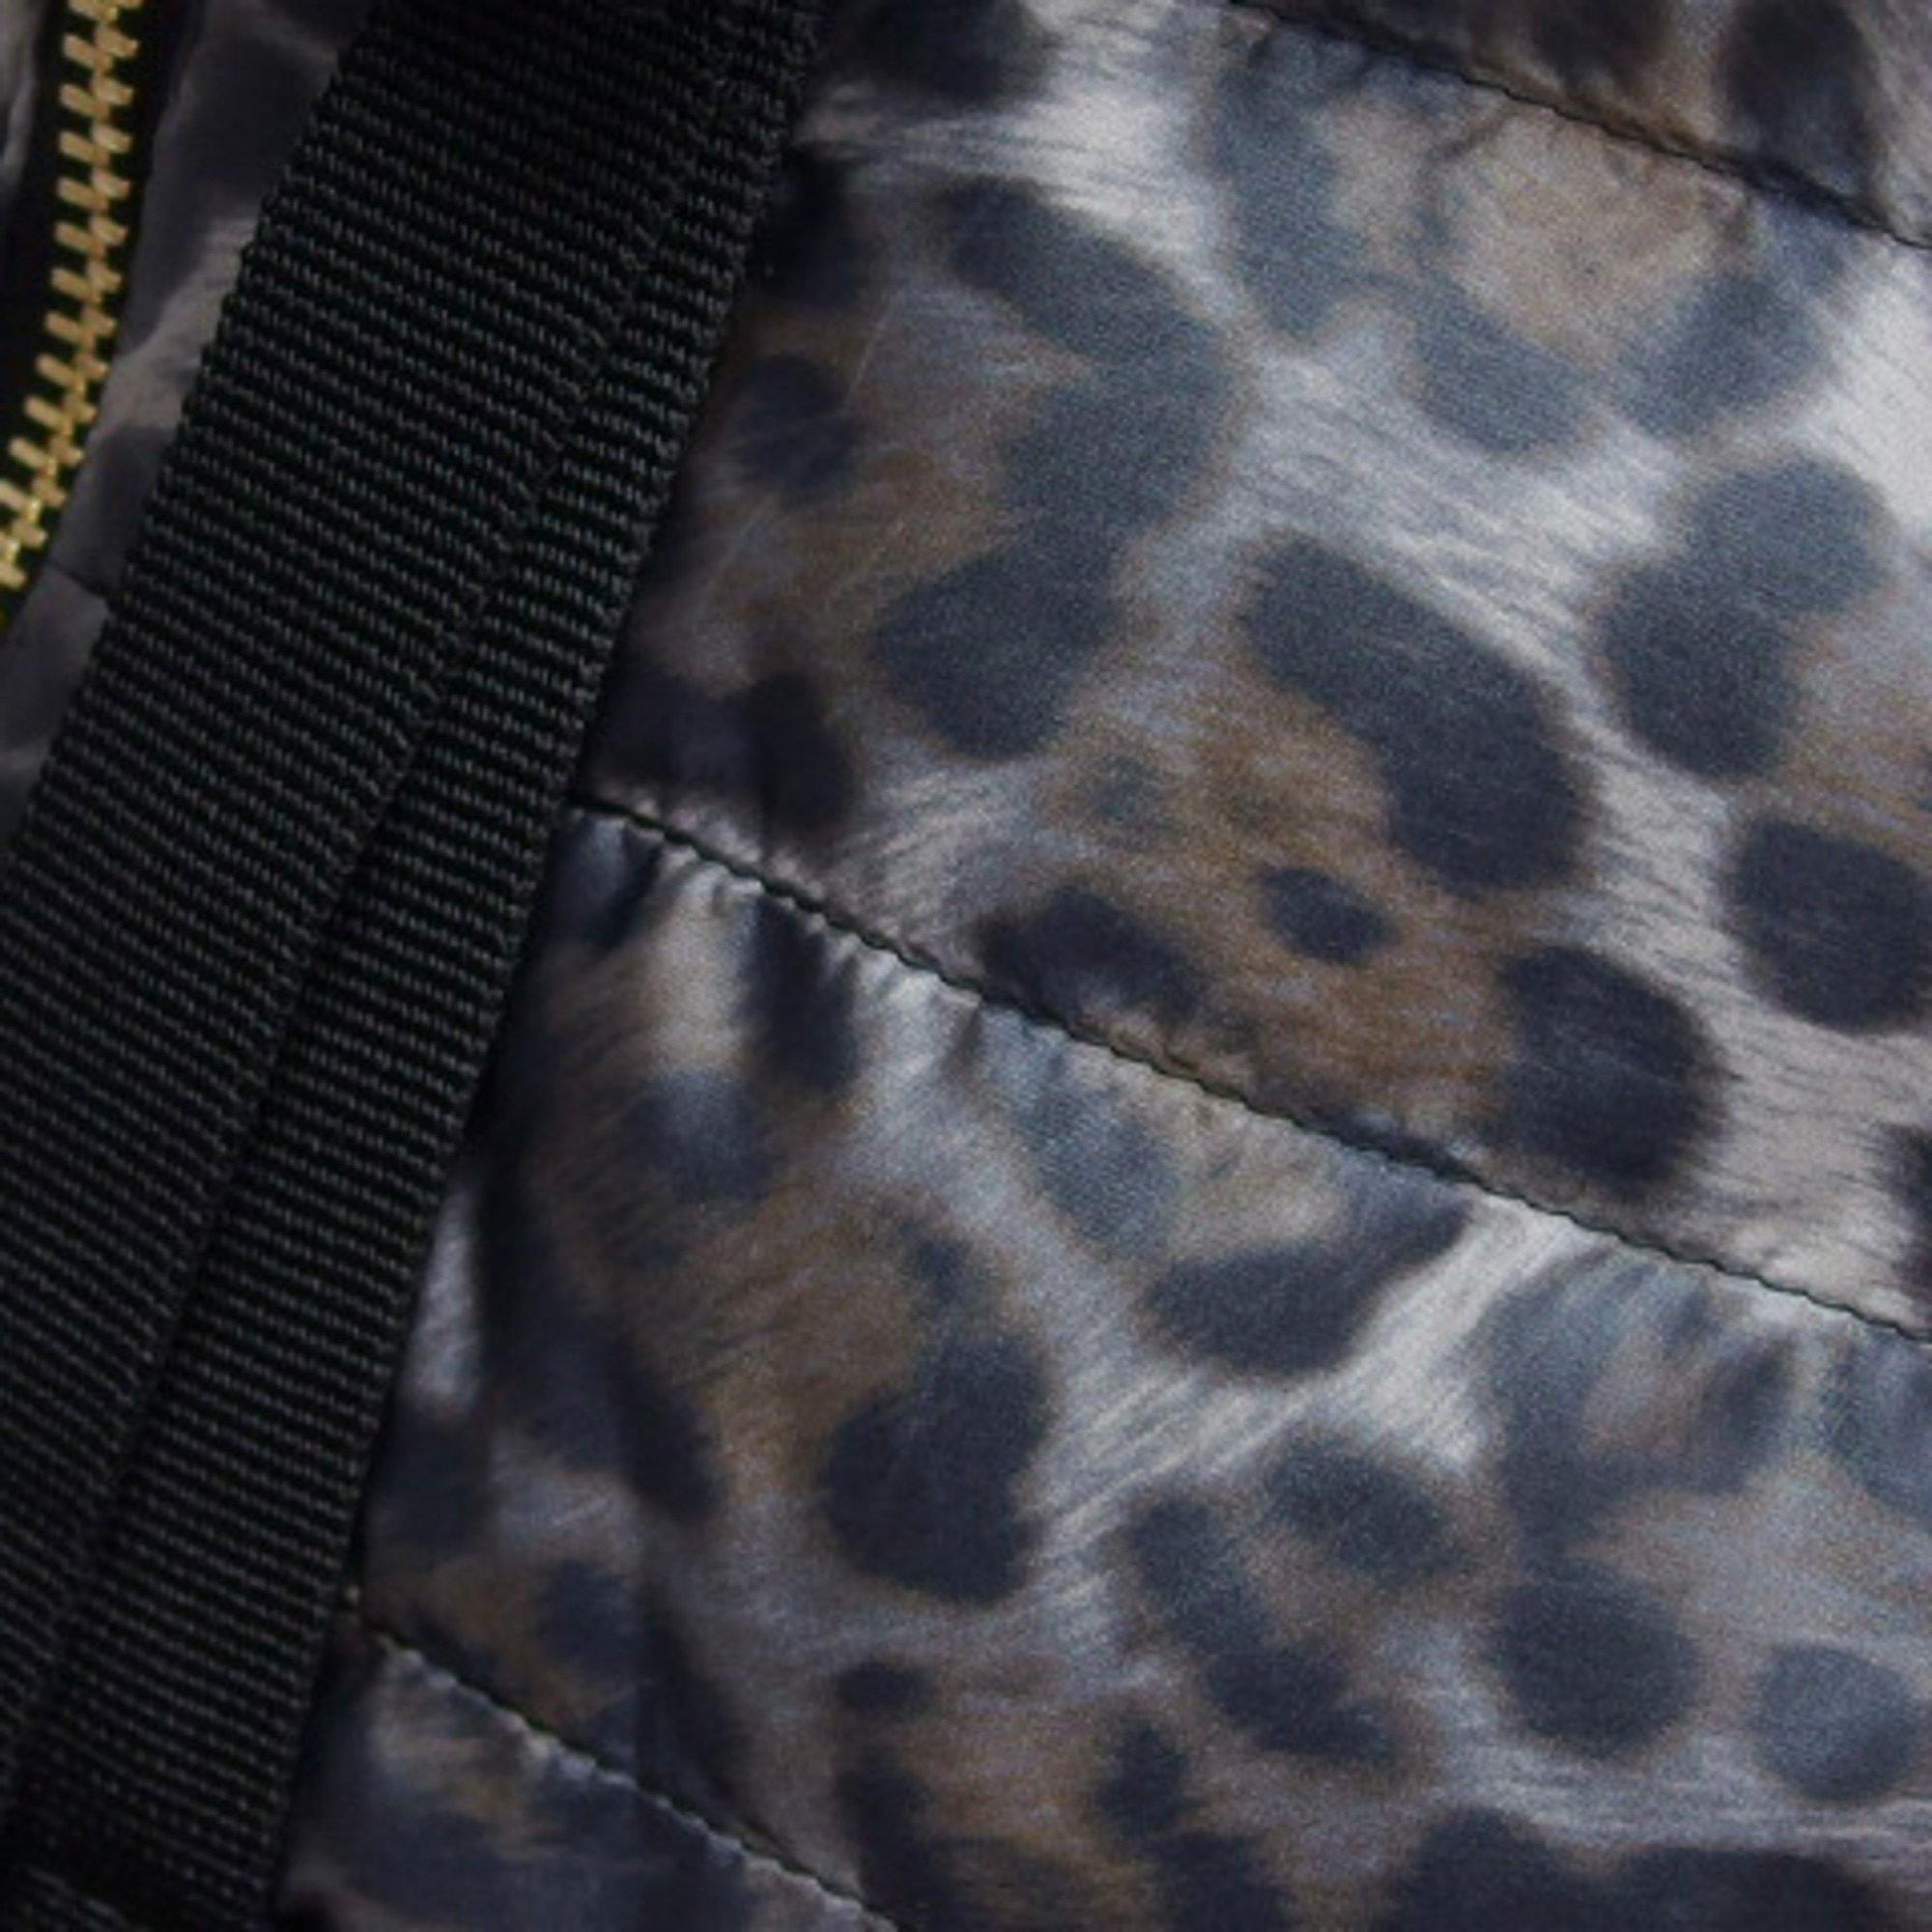 Moncler ZAINO Leopard Print Nylon Backpack Grey Black